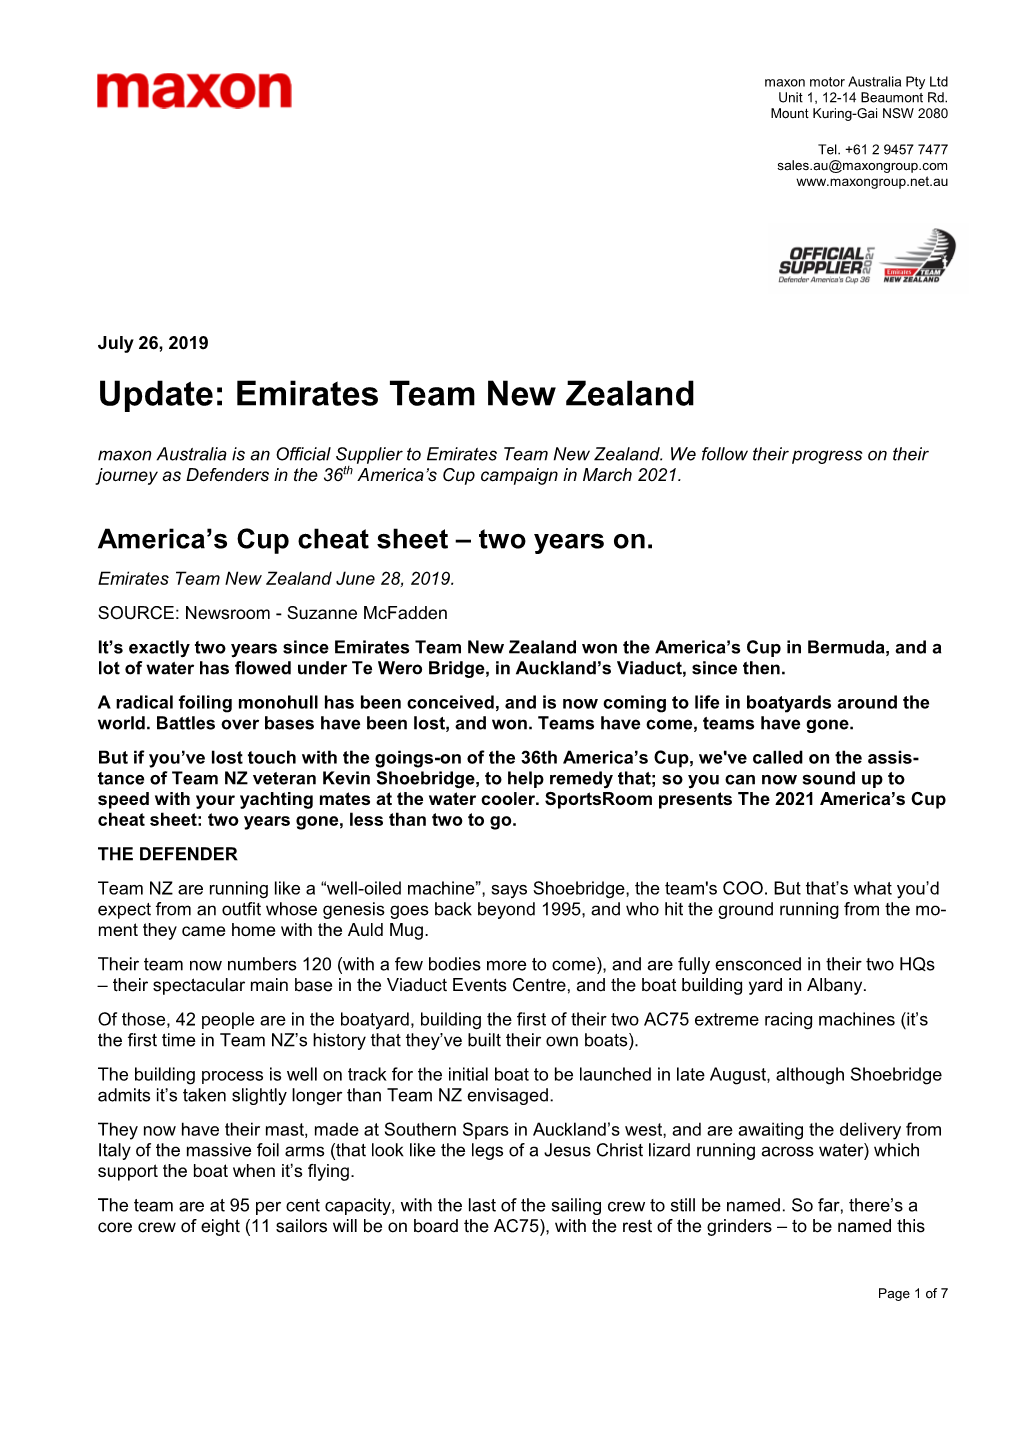 Update: Emirates Team New Zealand